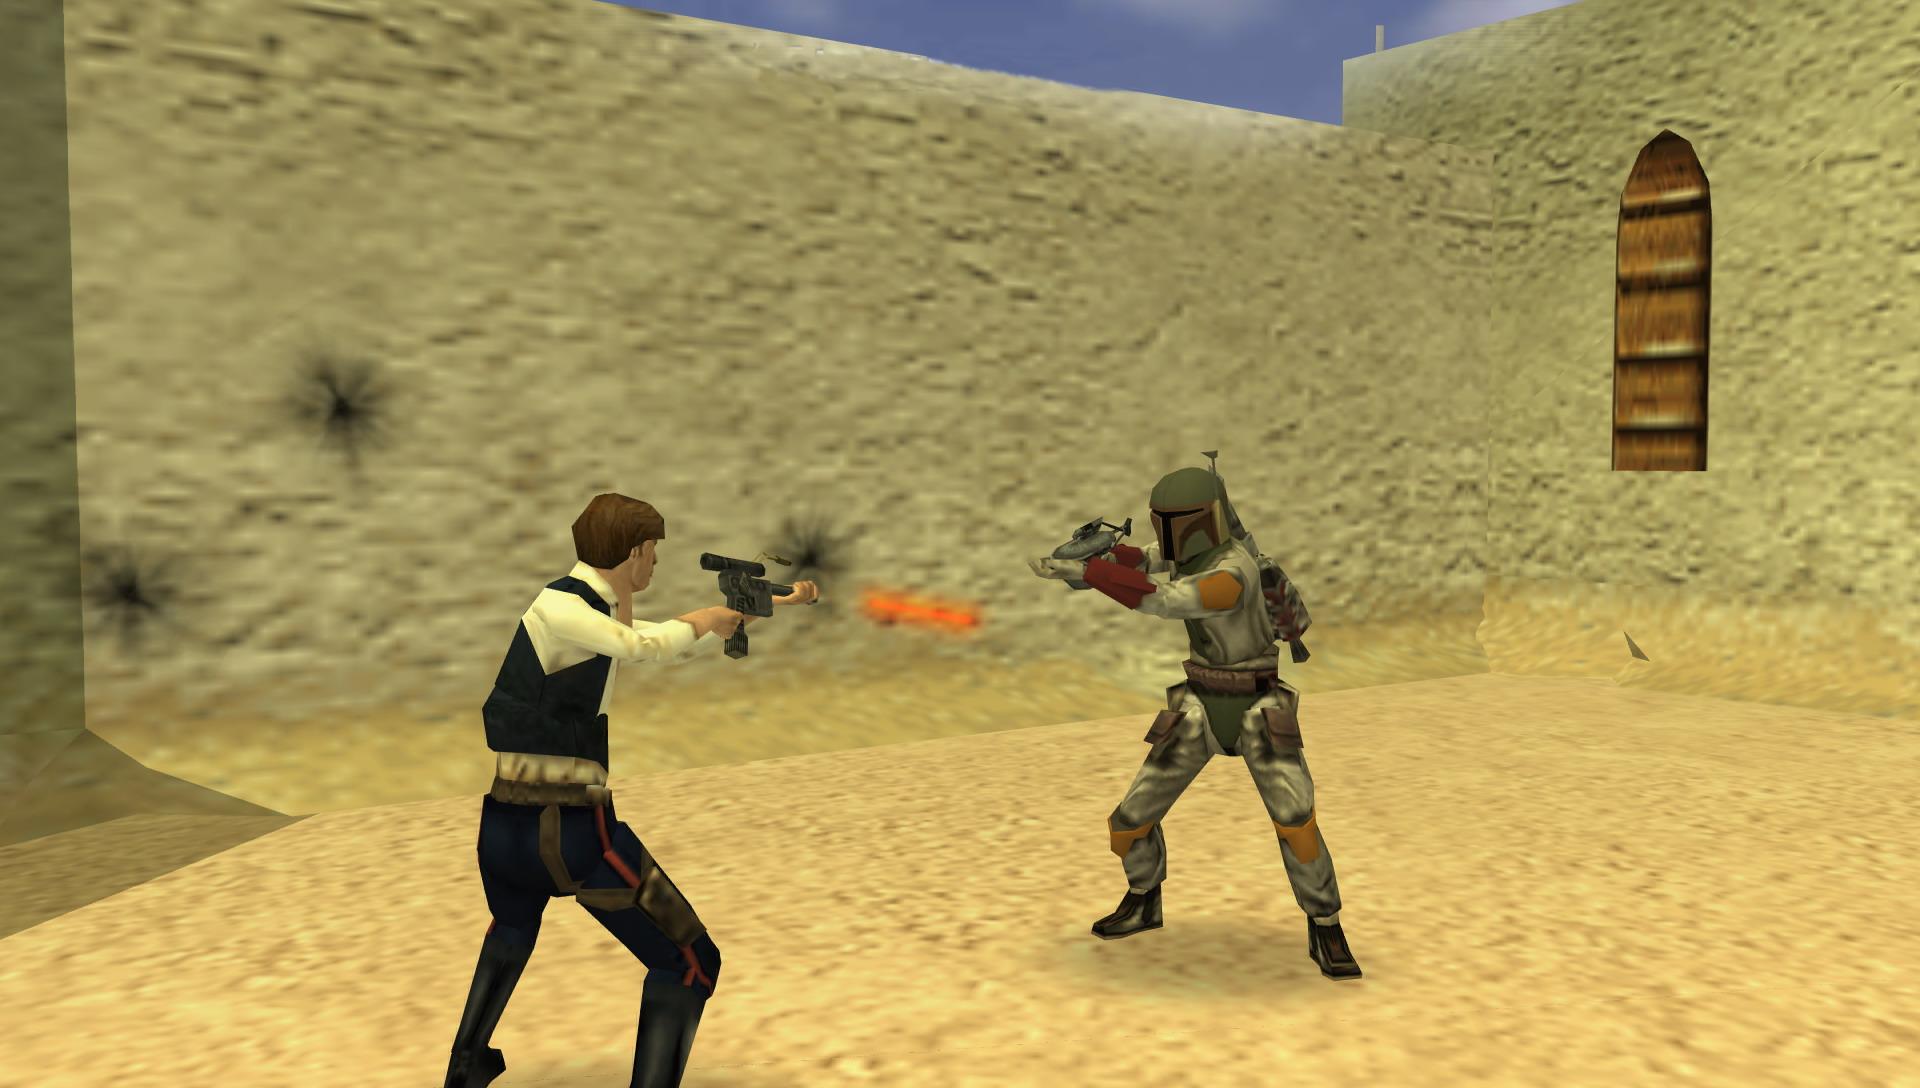 Wars battle on PSP sighted | GamesRadar+